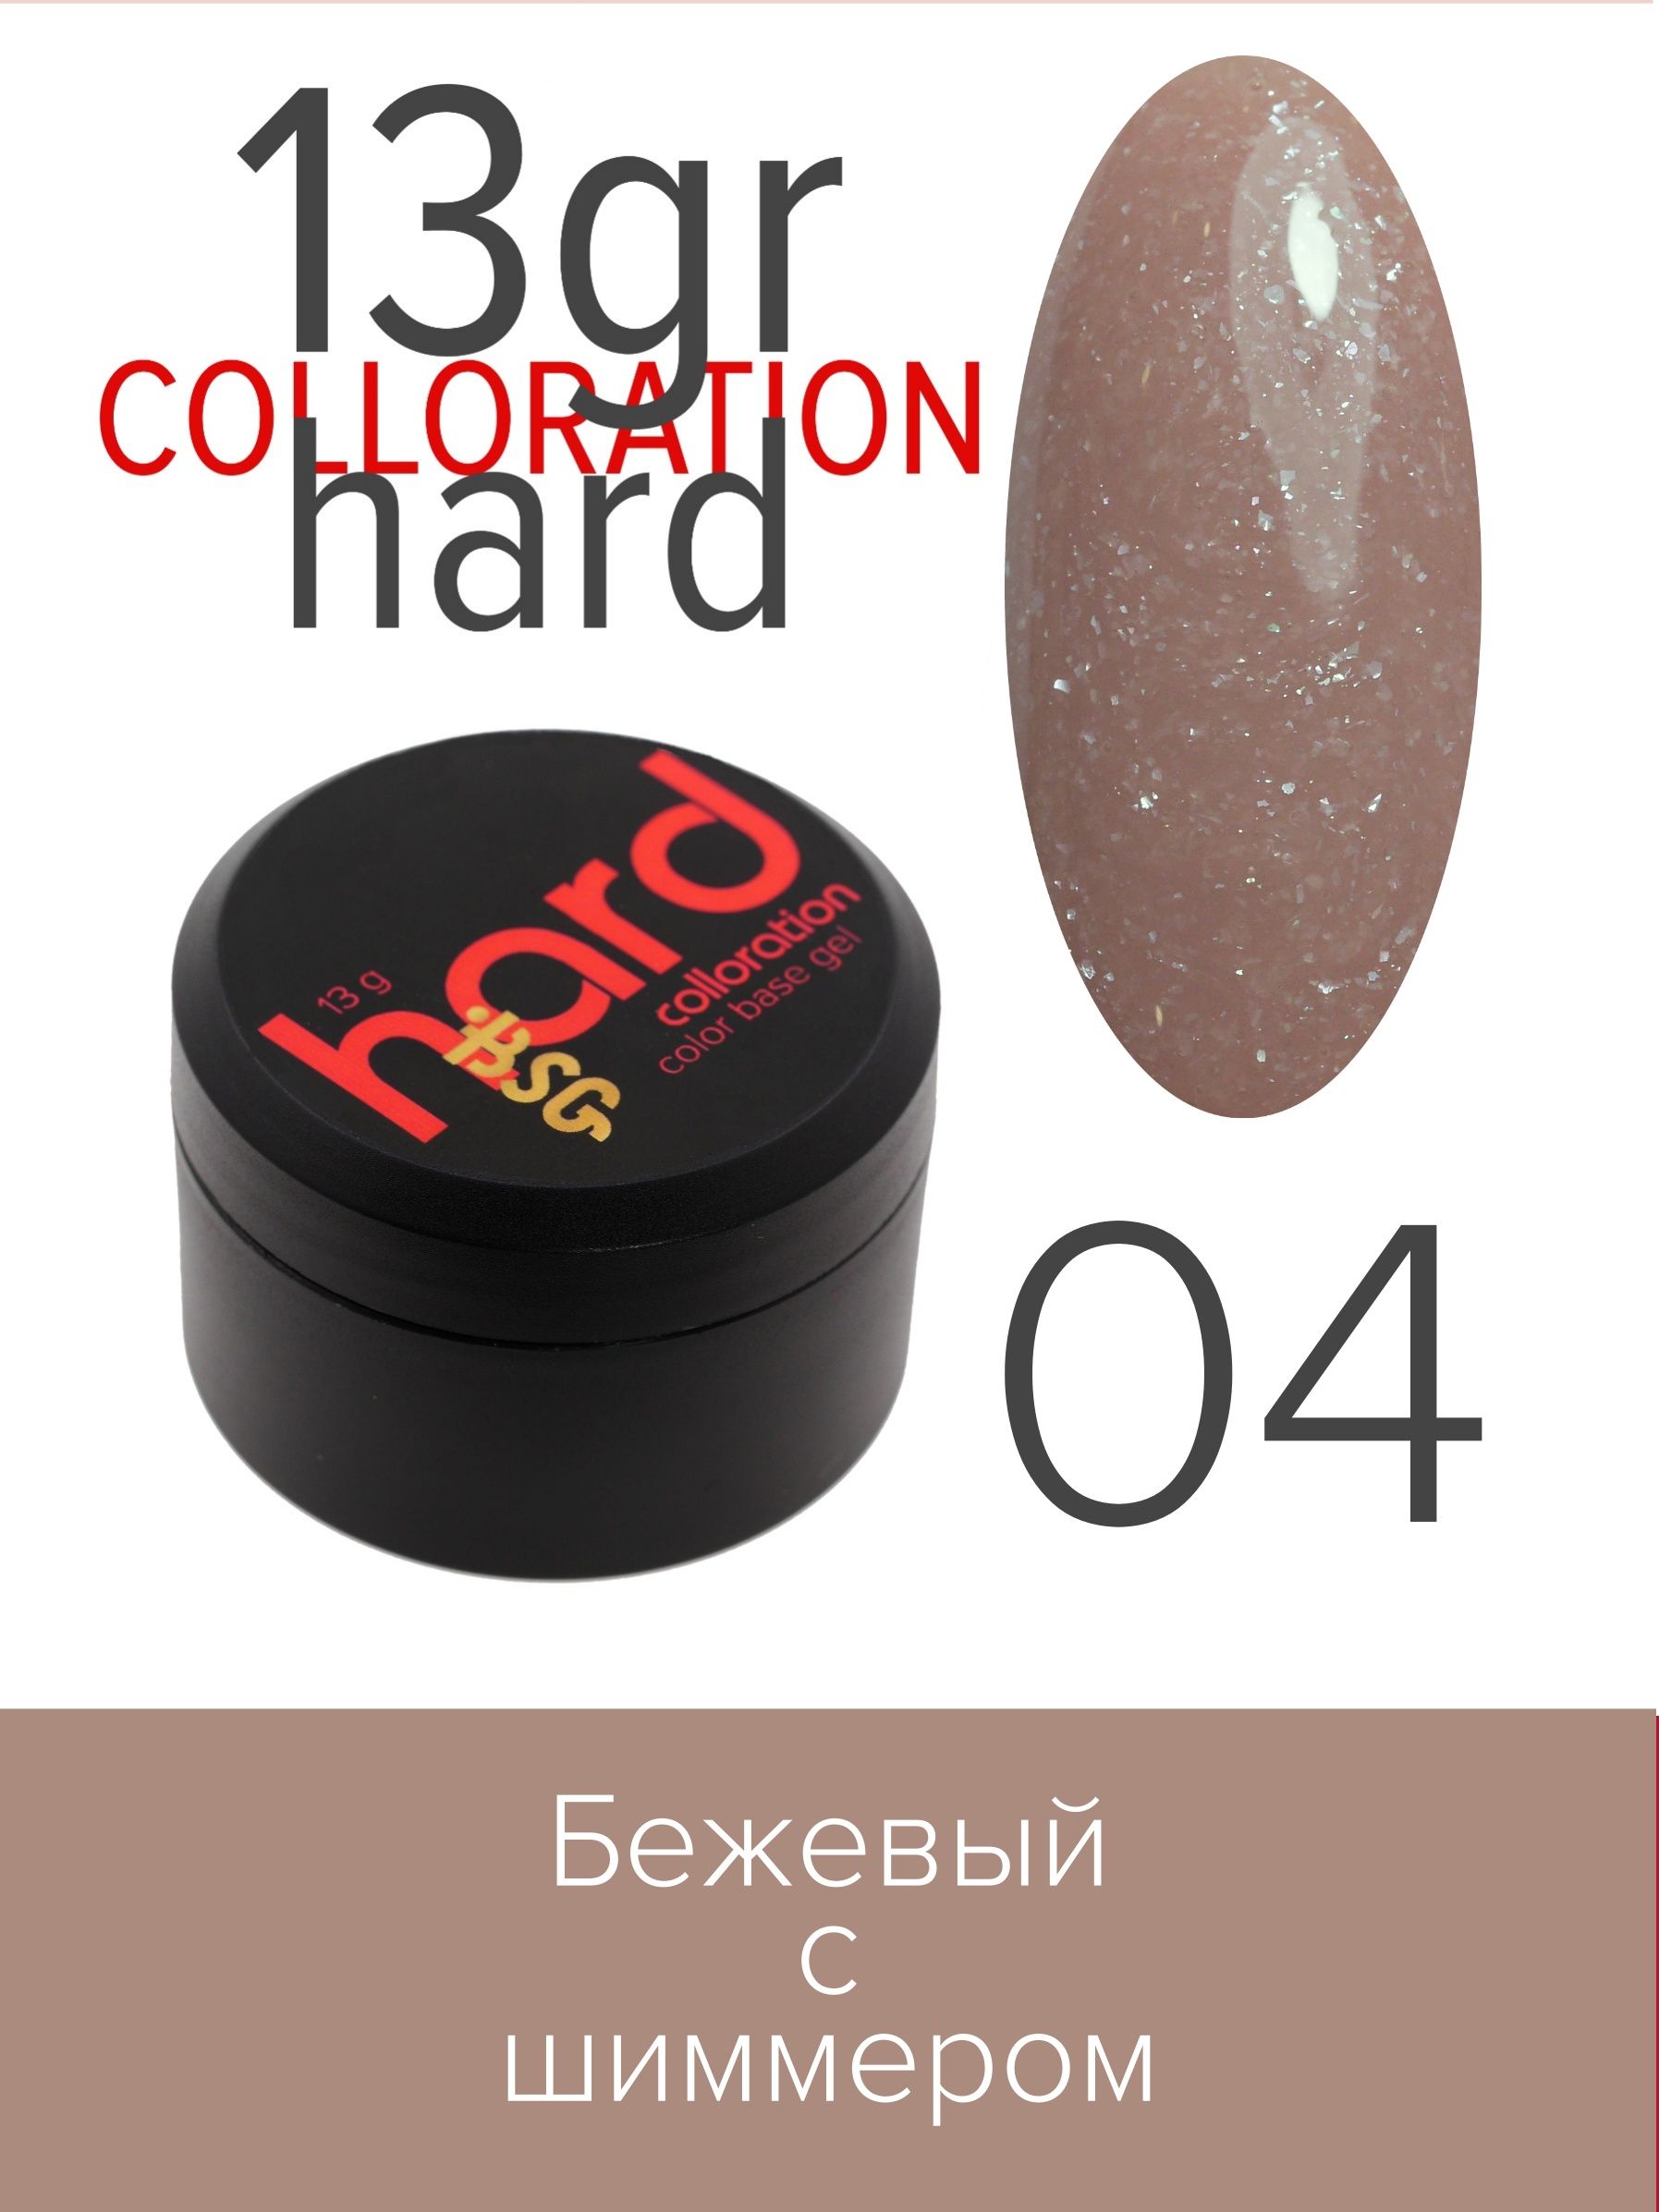 База BSG Colloration Hard цветная жесткая №04